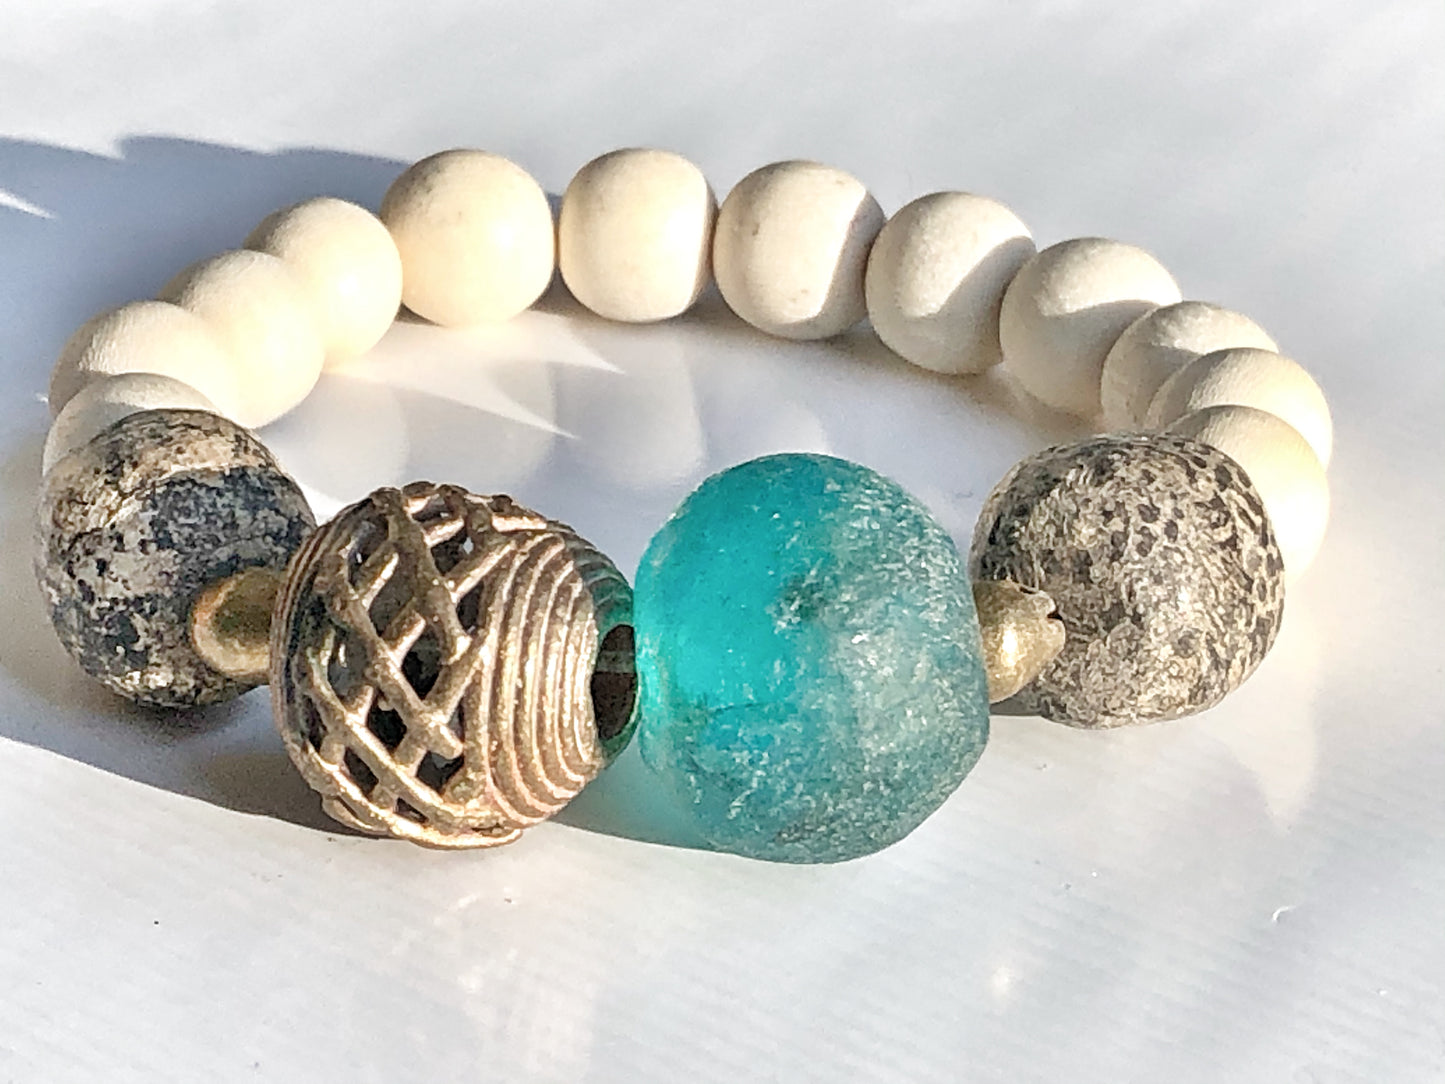 Aqua Blue Recycled Glass Bracelet with Fossilized Stegodon Beads